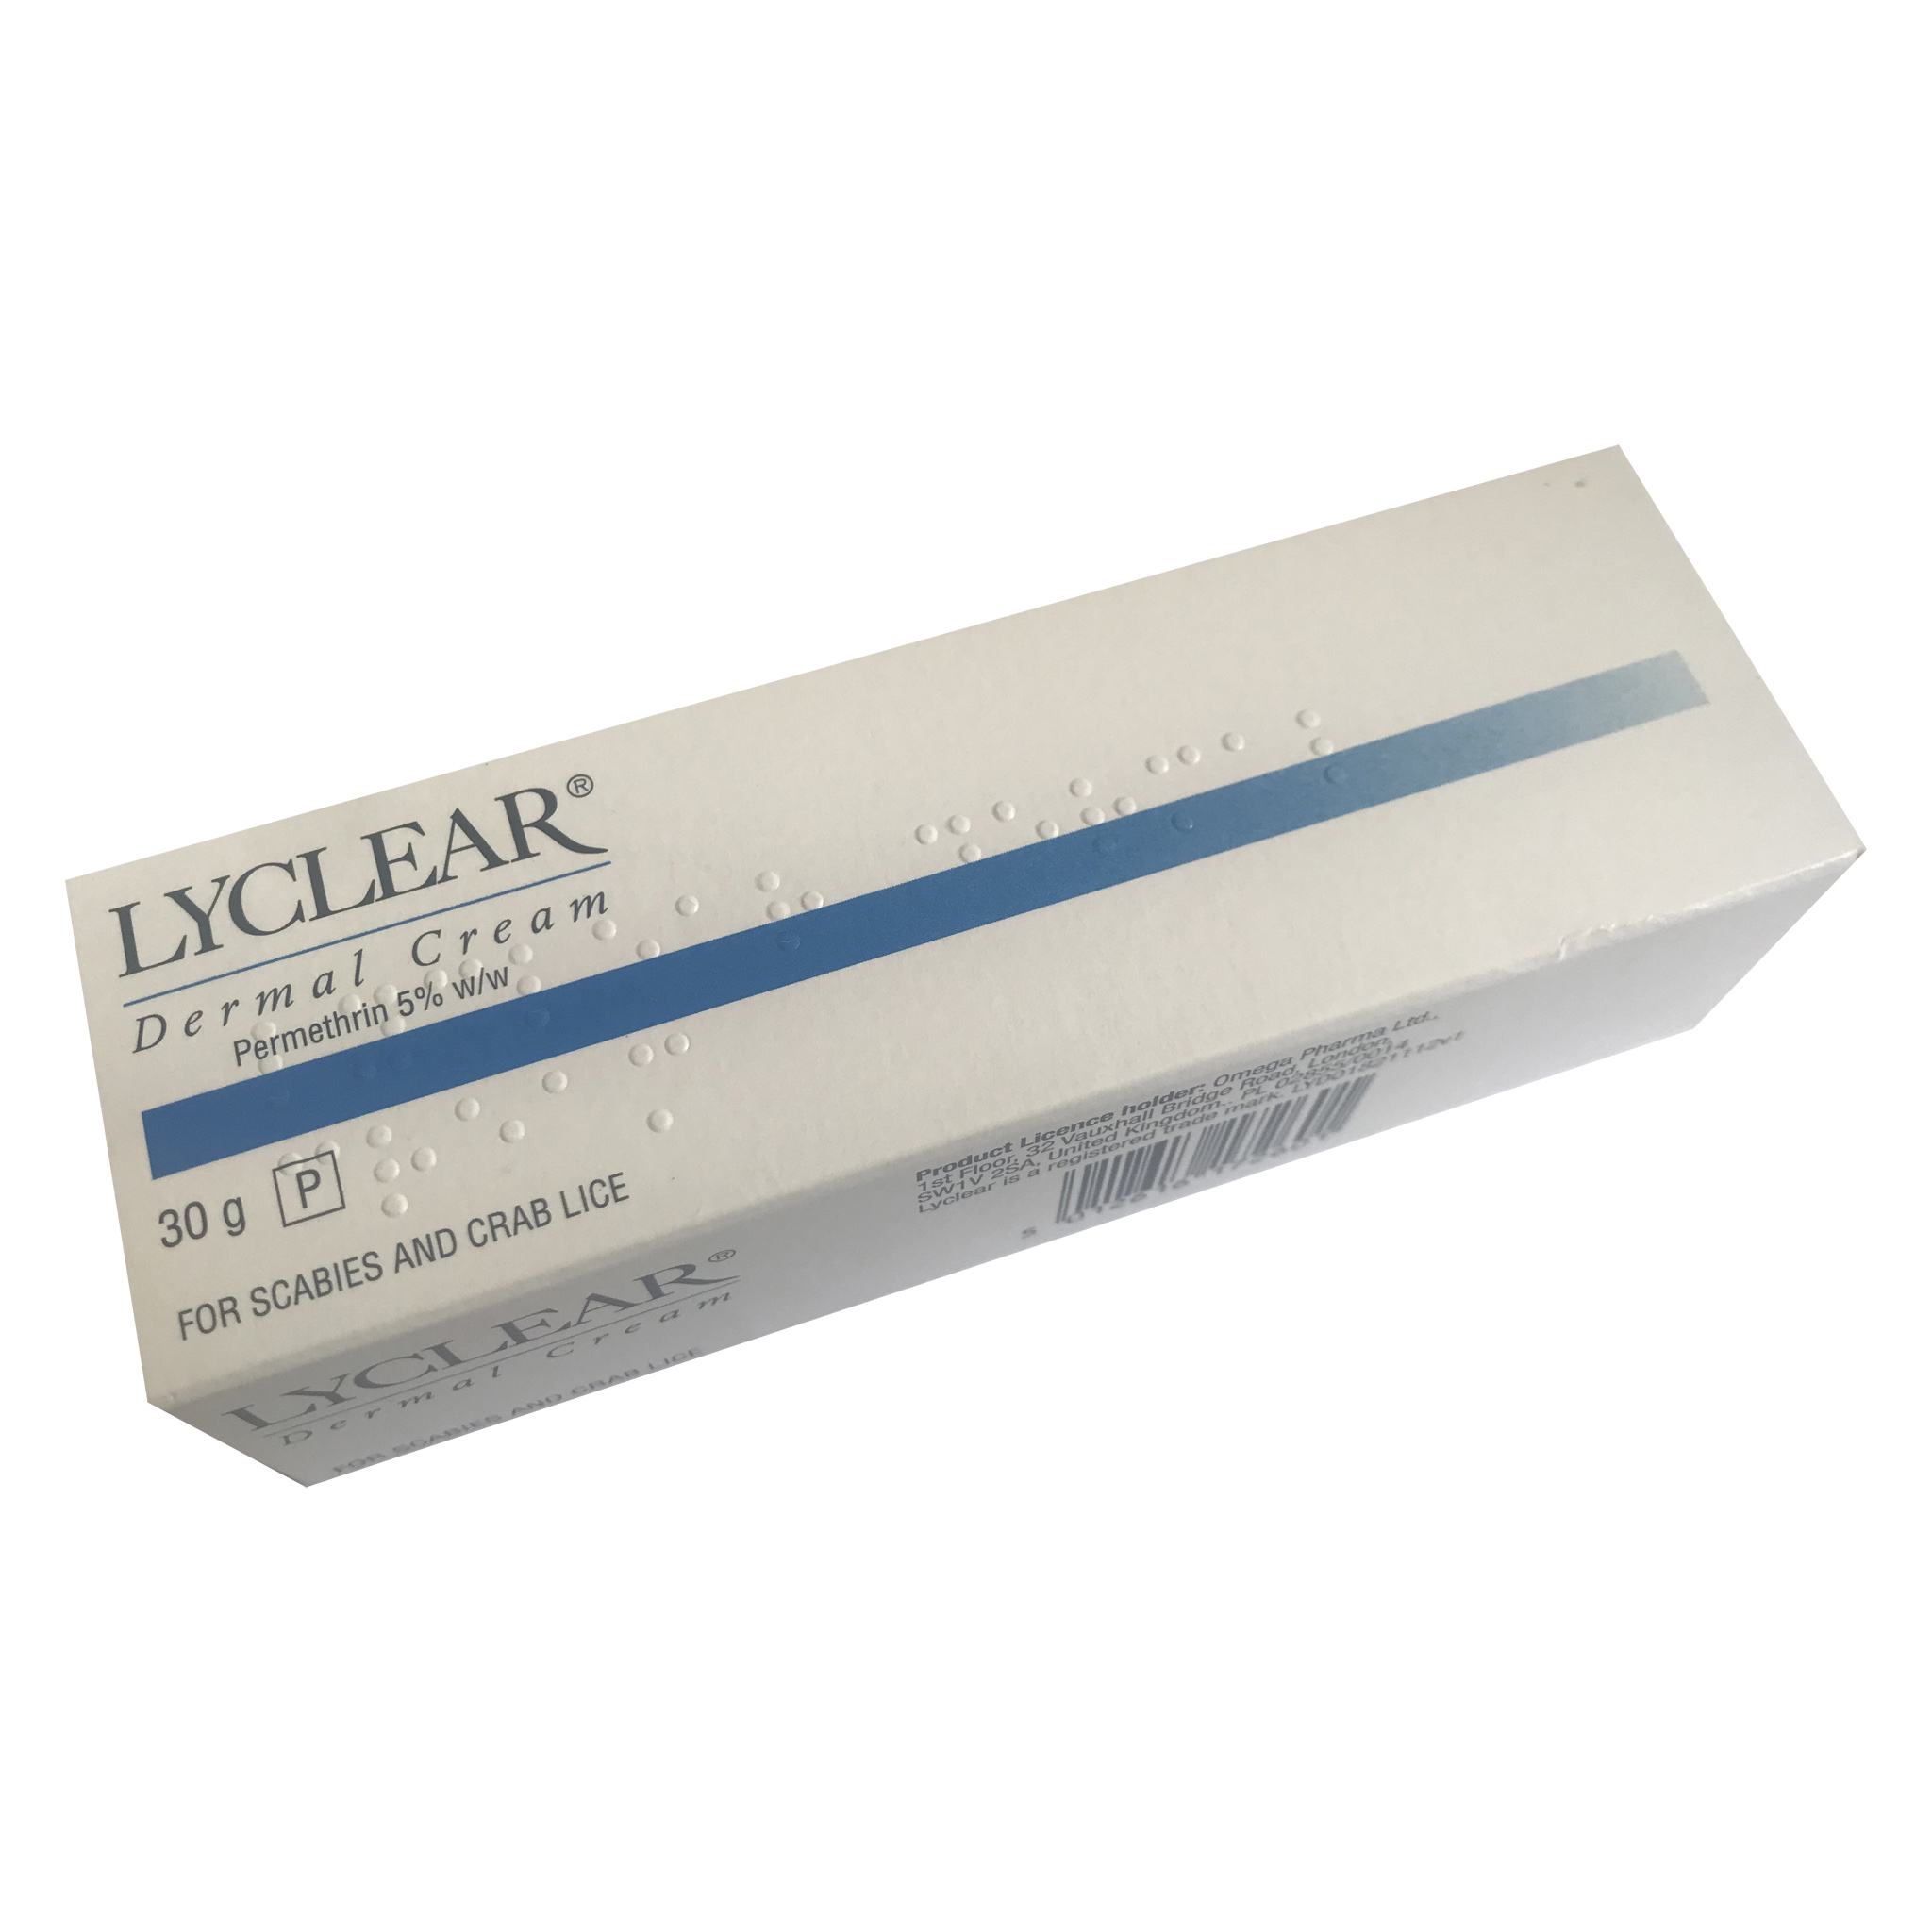 Lyclear Dermal Cream (30g) - 5 Packs